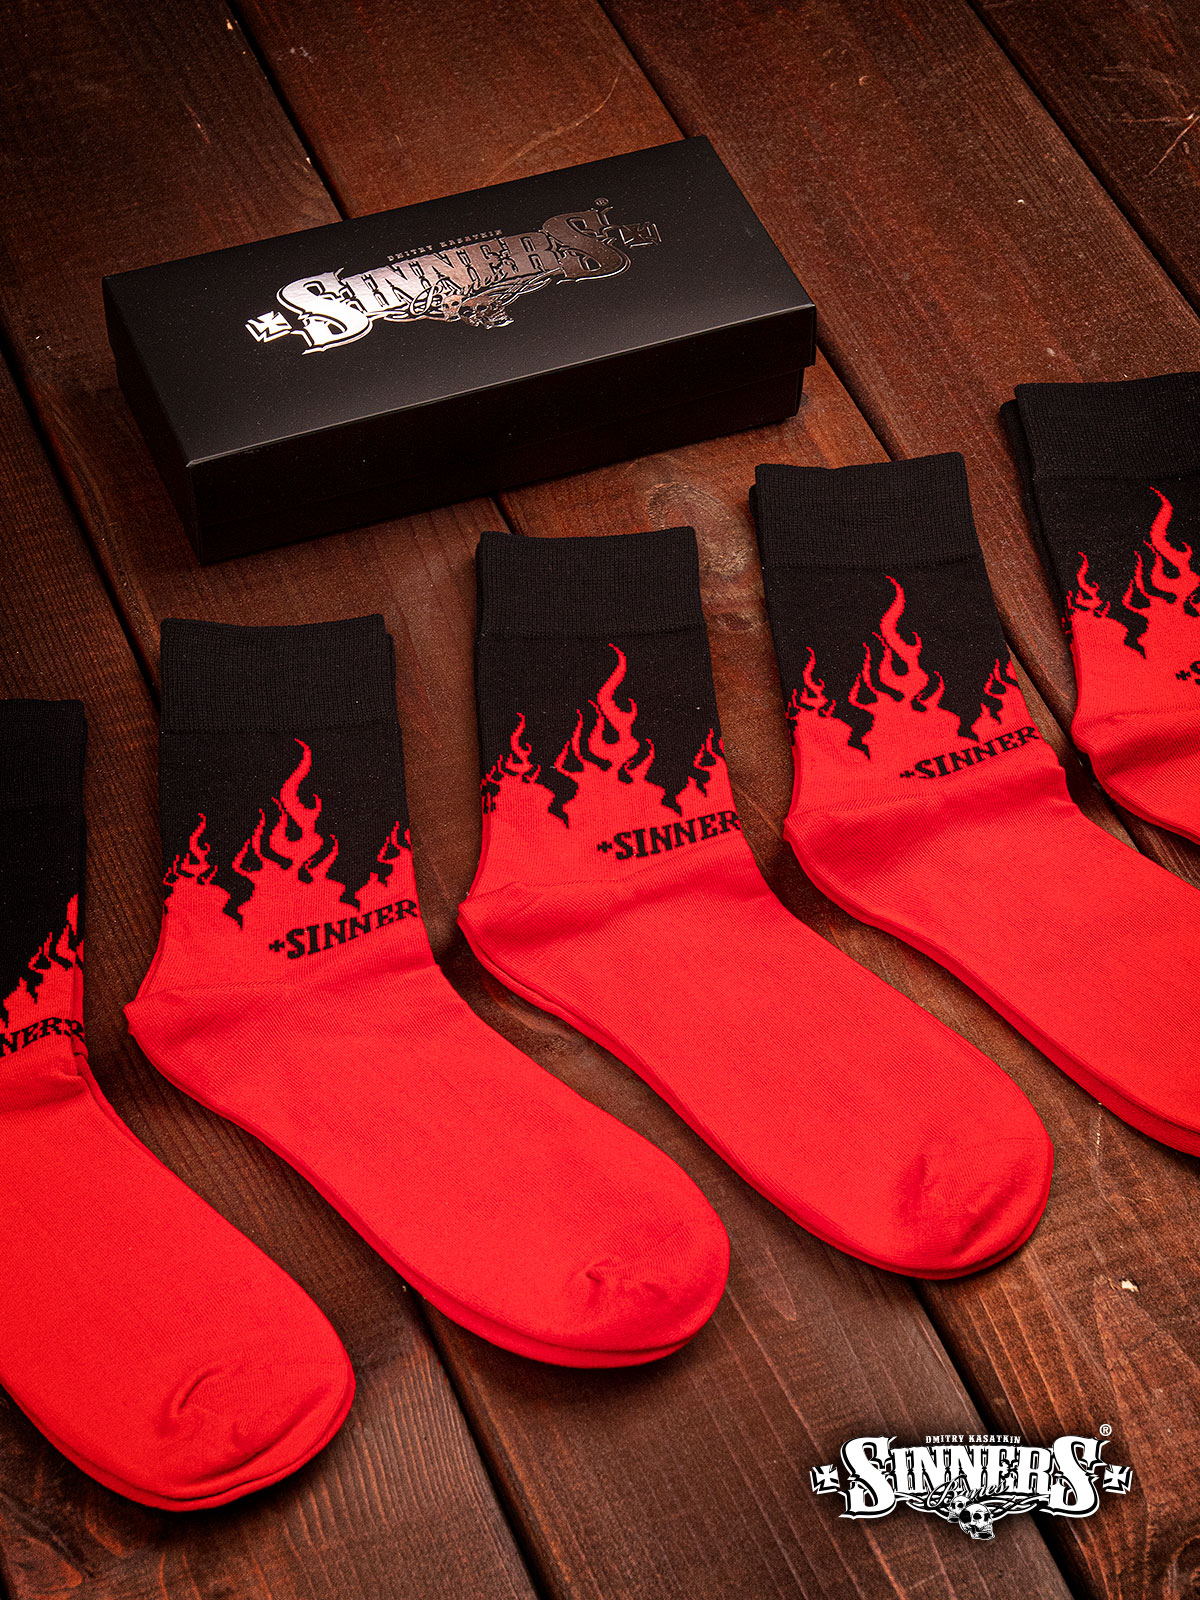 Set Socks "Highway to Hell"